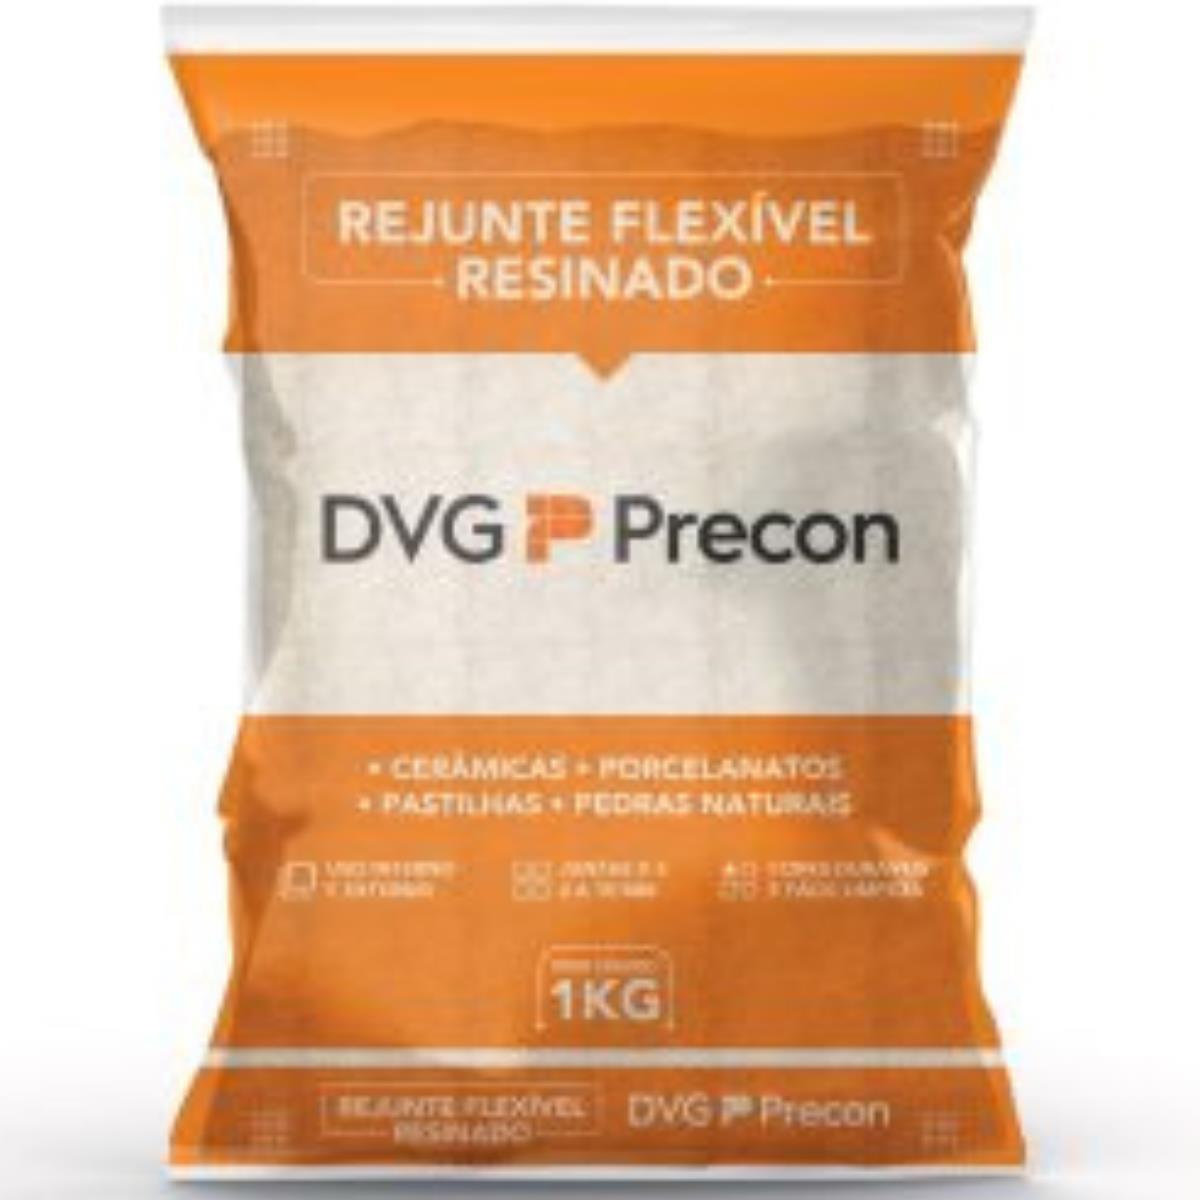 Rejunte Flexivel Resinado 1Kg - Precon